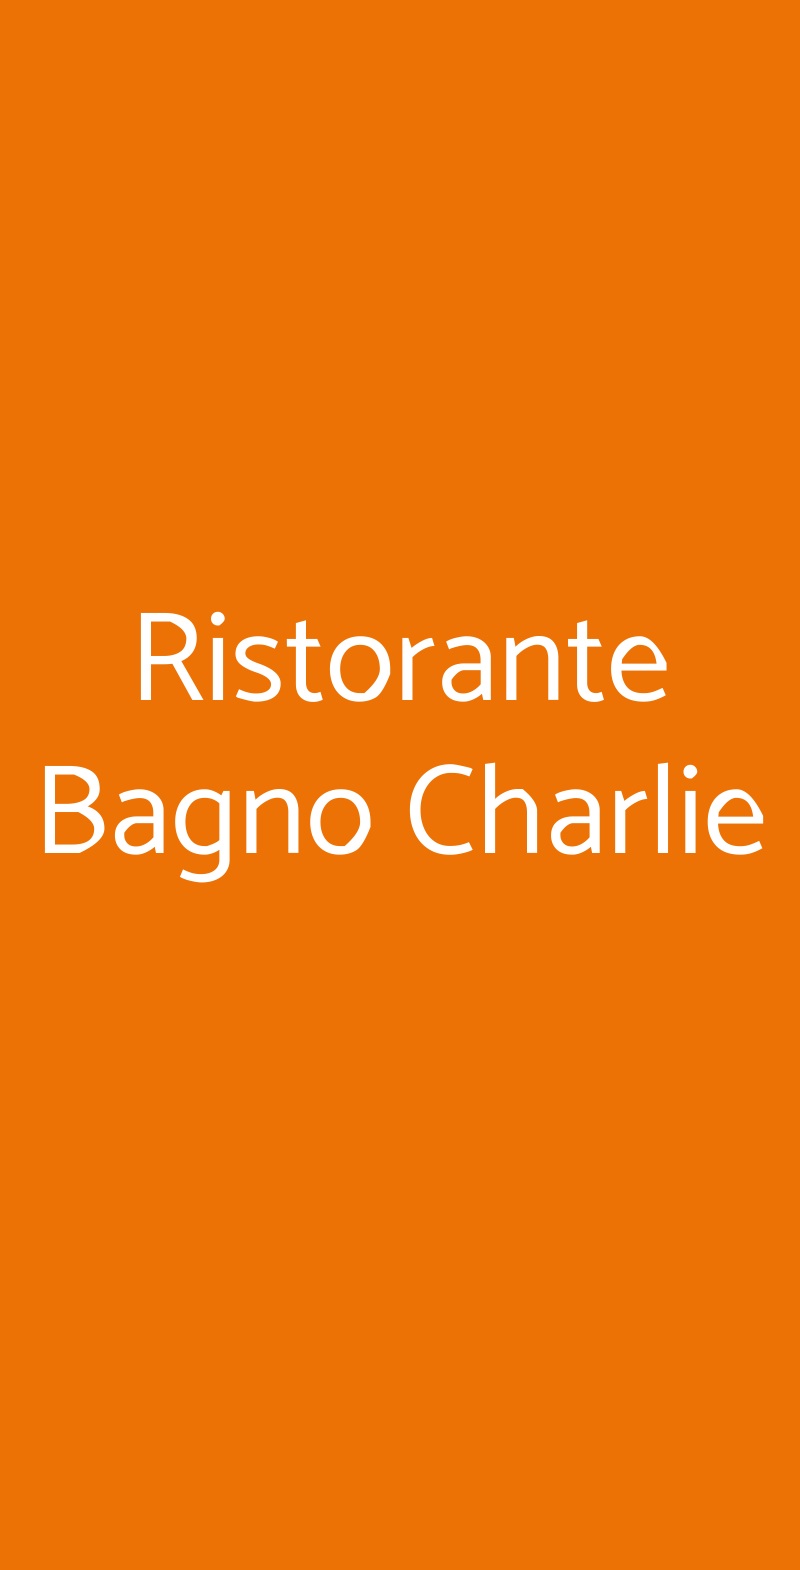 Ristorante Bagno Charlie Marina di Ravenna menù 1 pagina